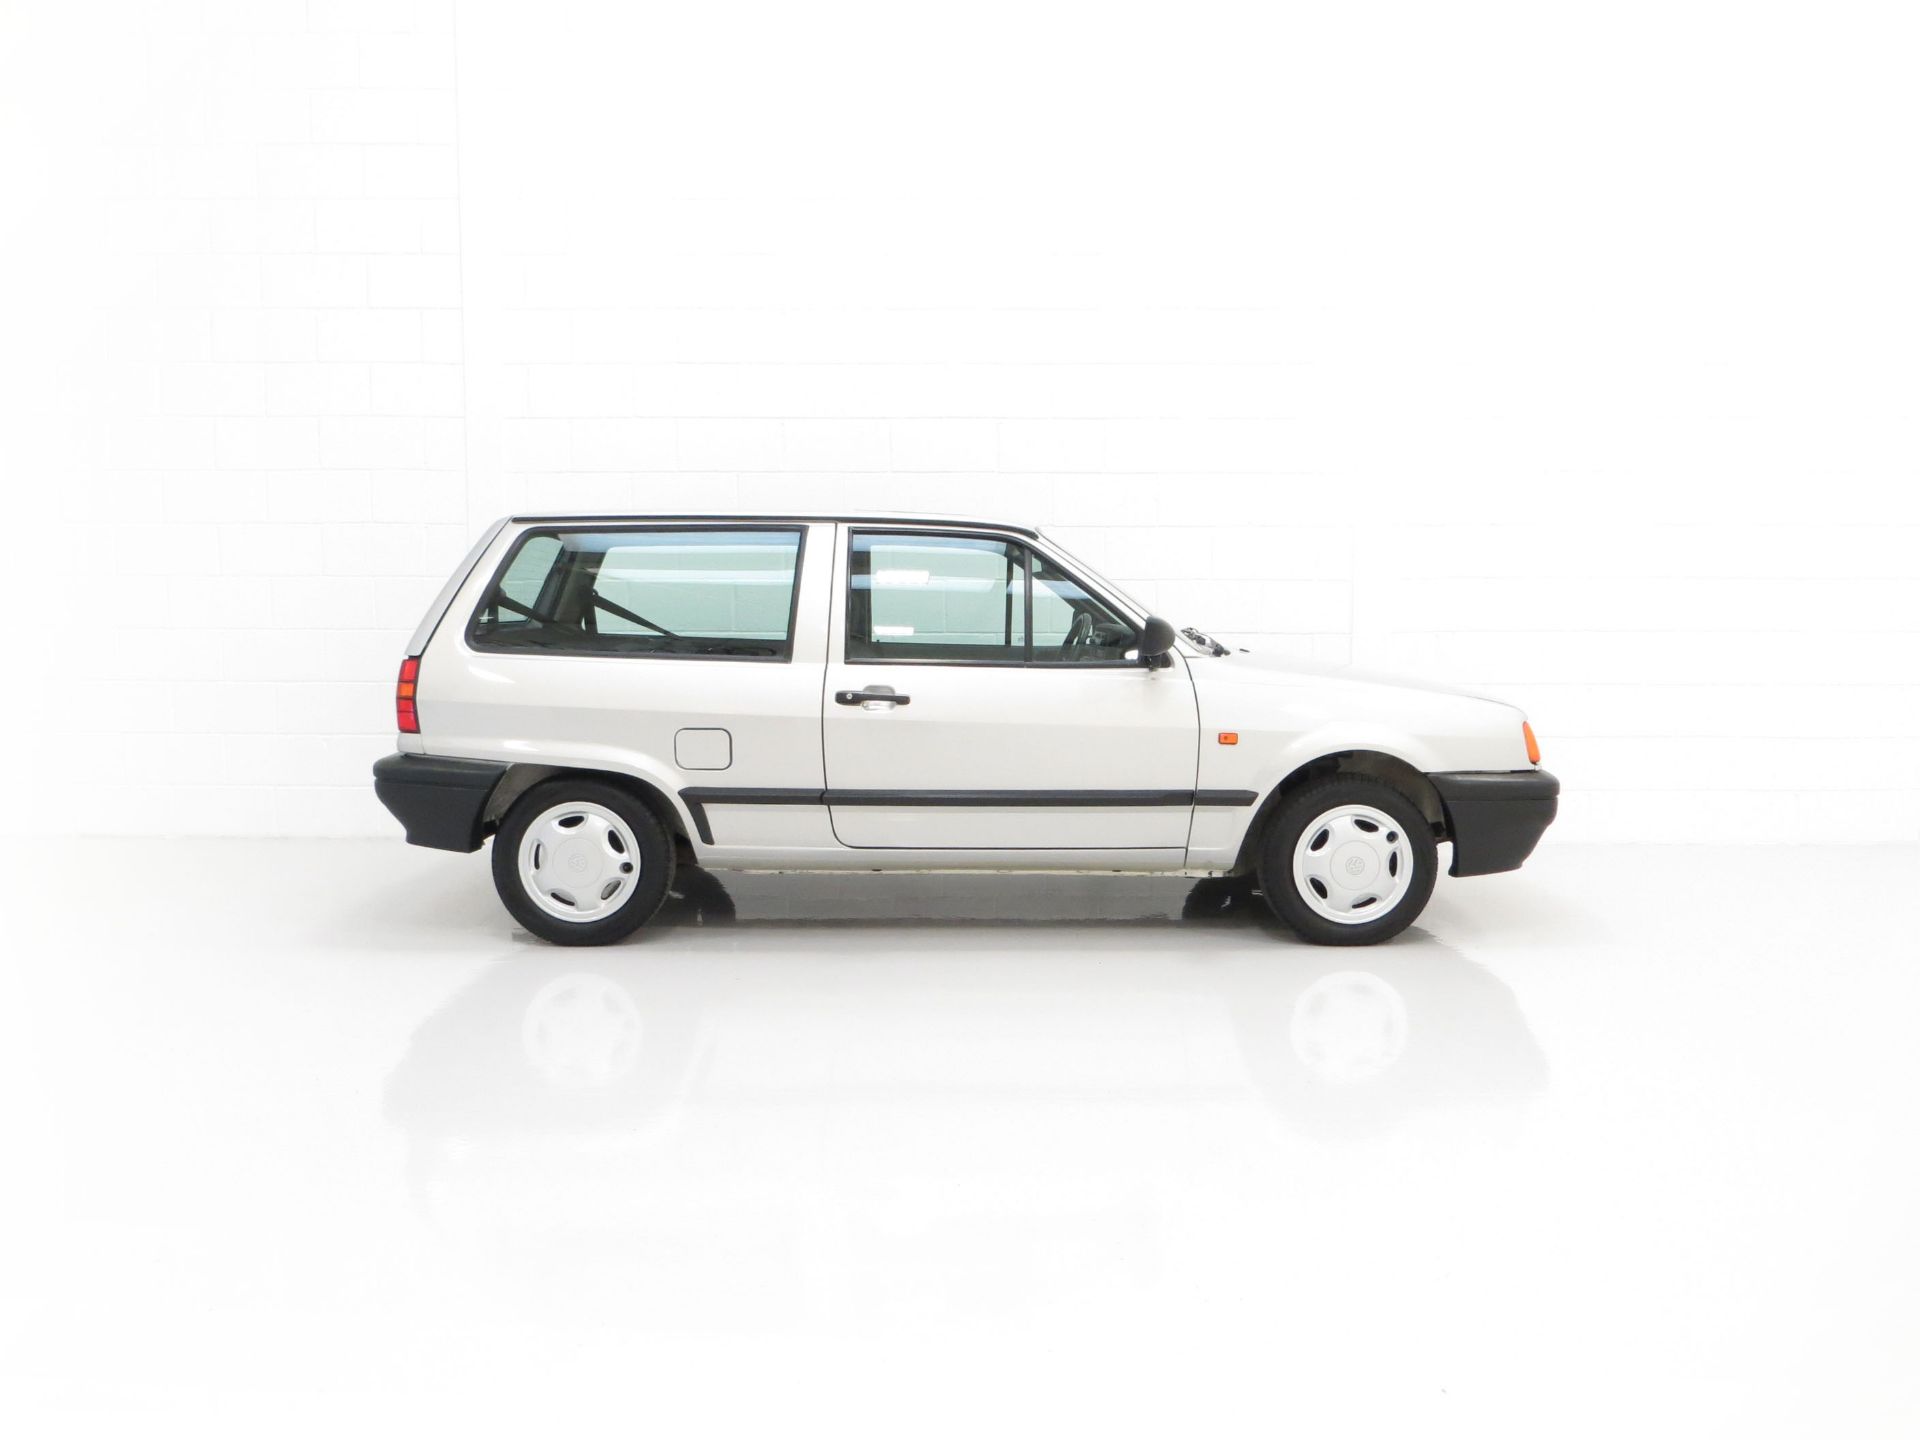 1992 Volkswagen Polo Mk2F Genesis - Image 59 of 86